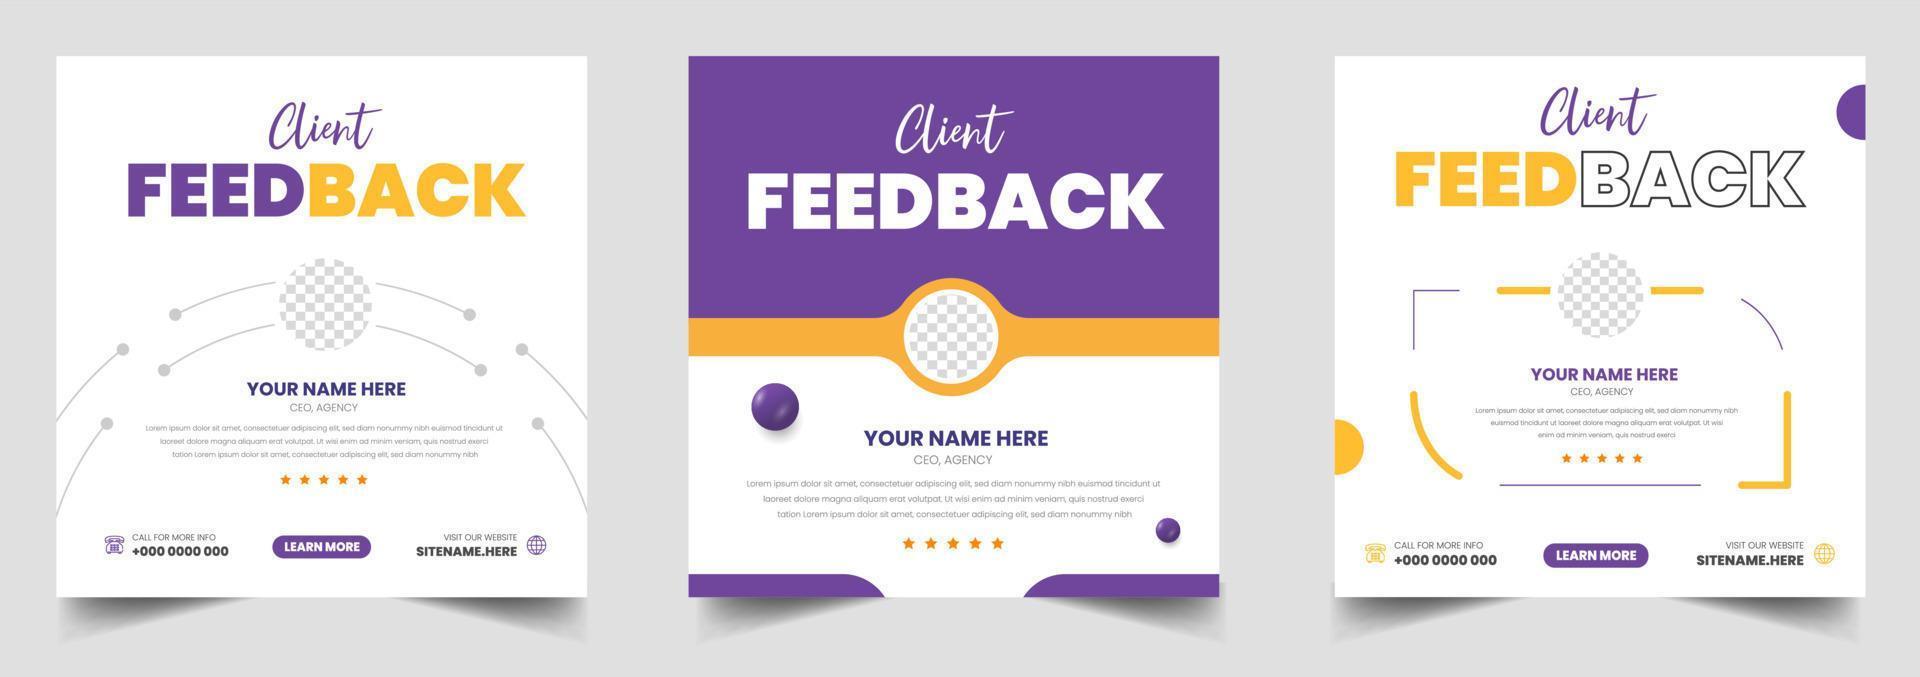 Customer feedback testimonial social media post web banner template. client testimonials social media post banner design template with blue color vector